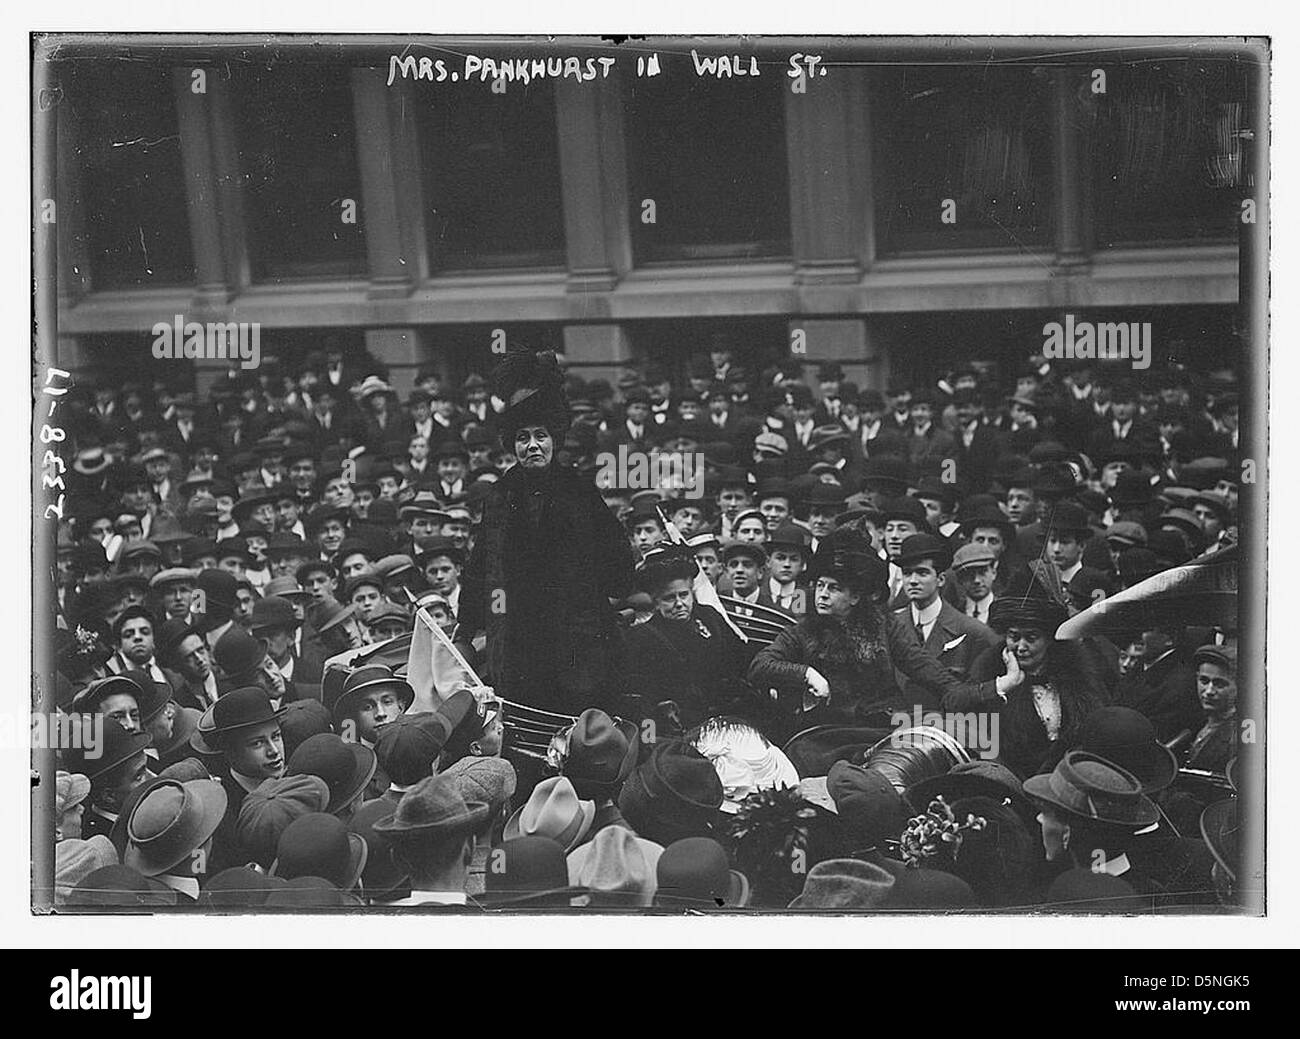 Mrs. Pankhurst in Wall St. (LOC) Stock Photo